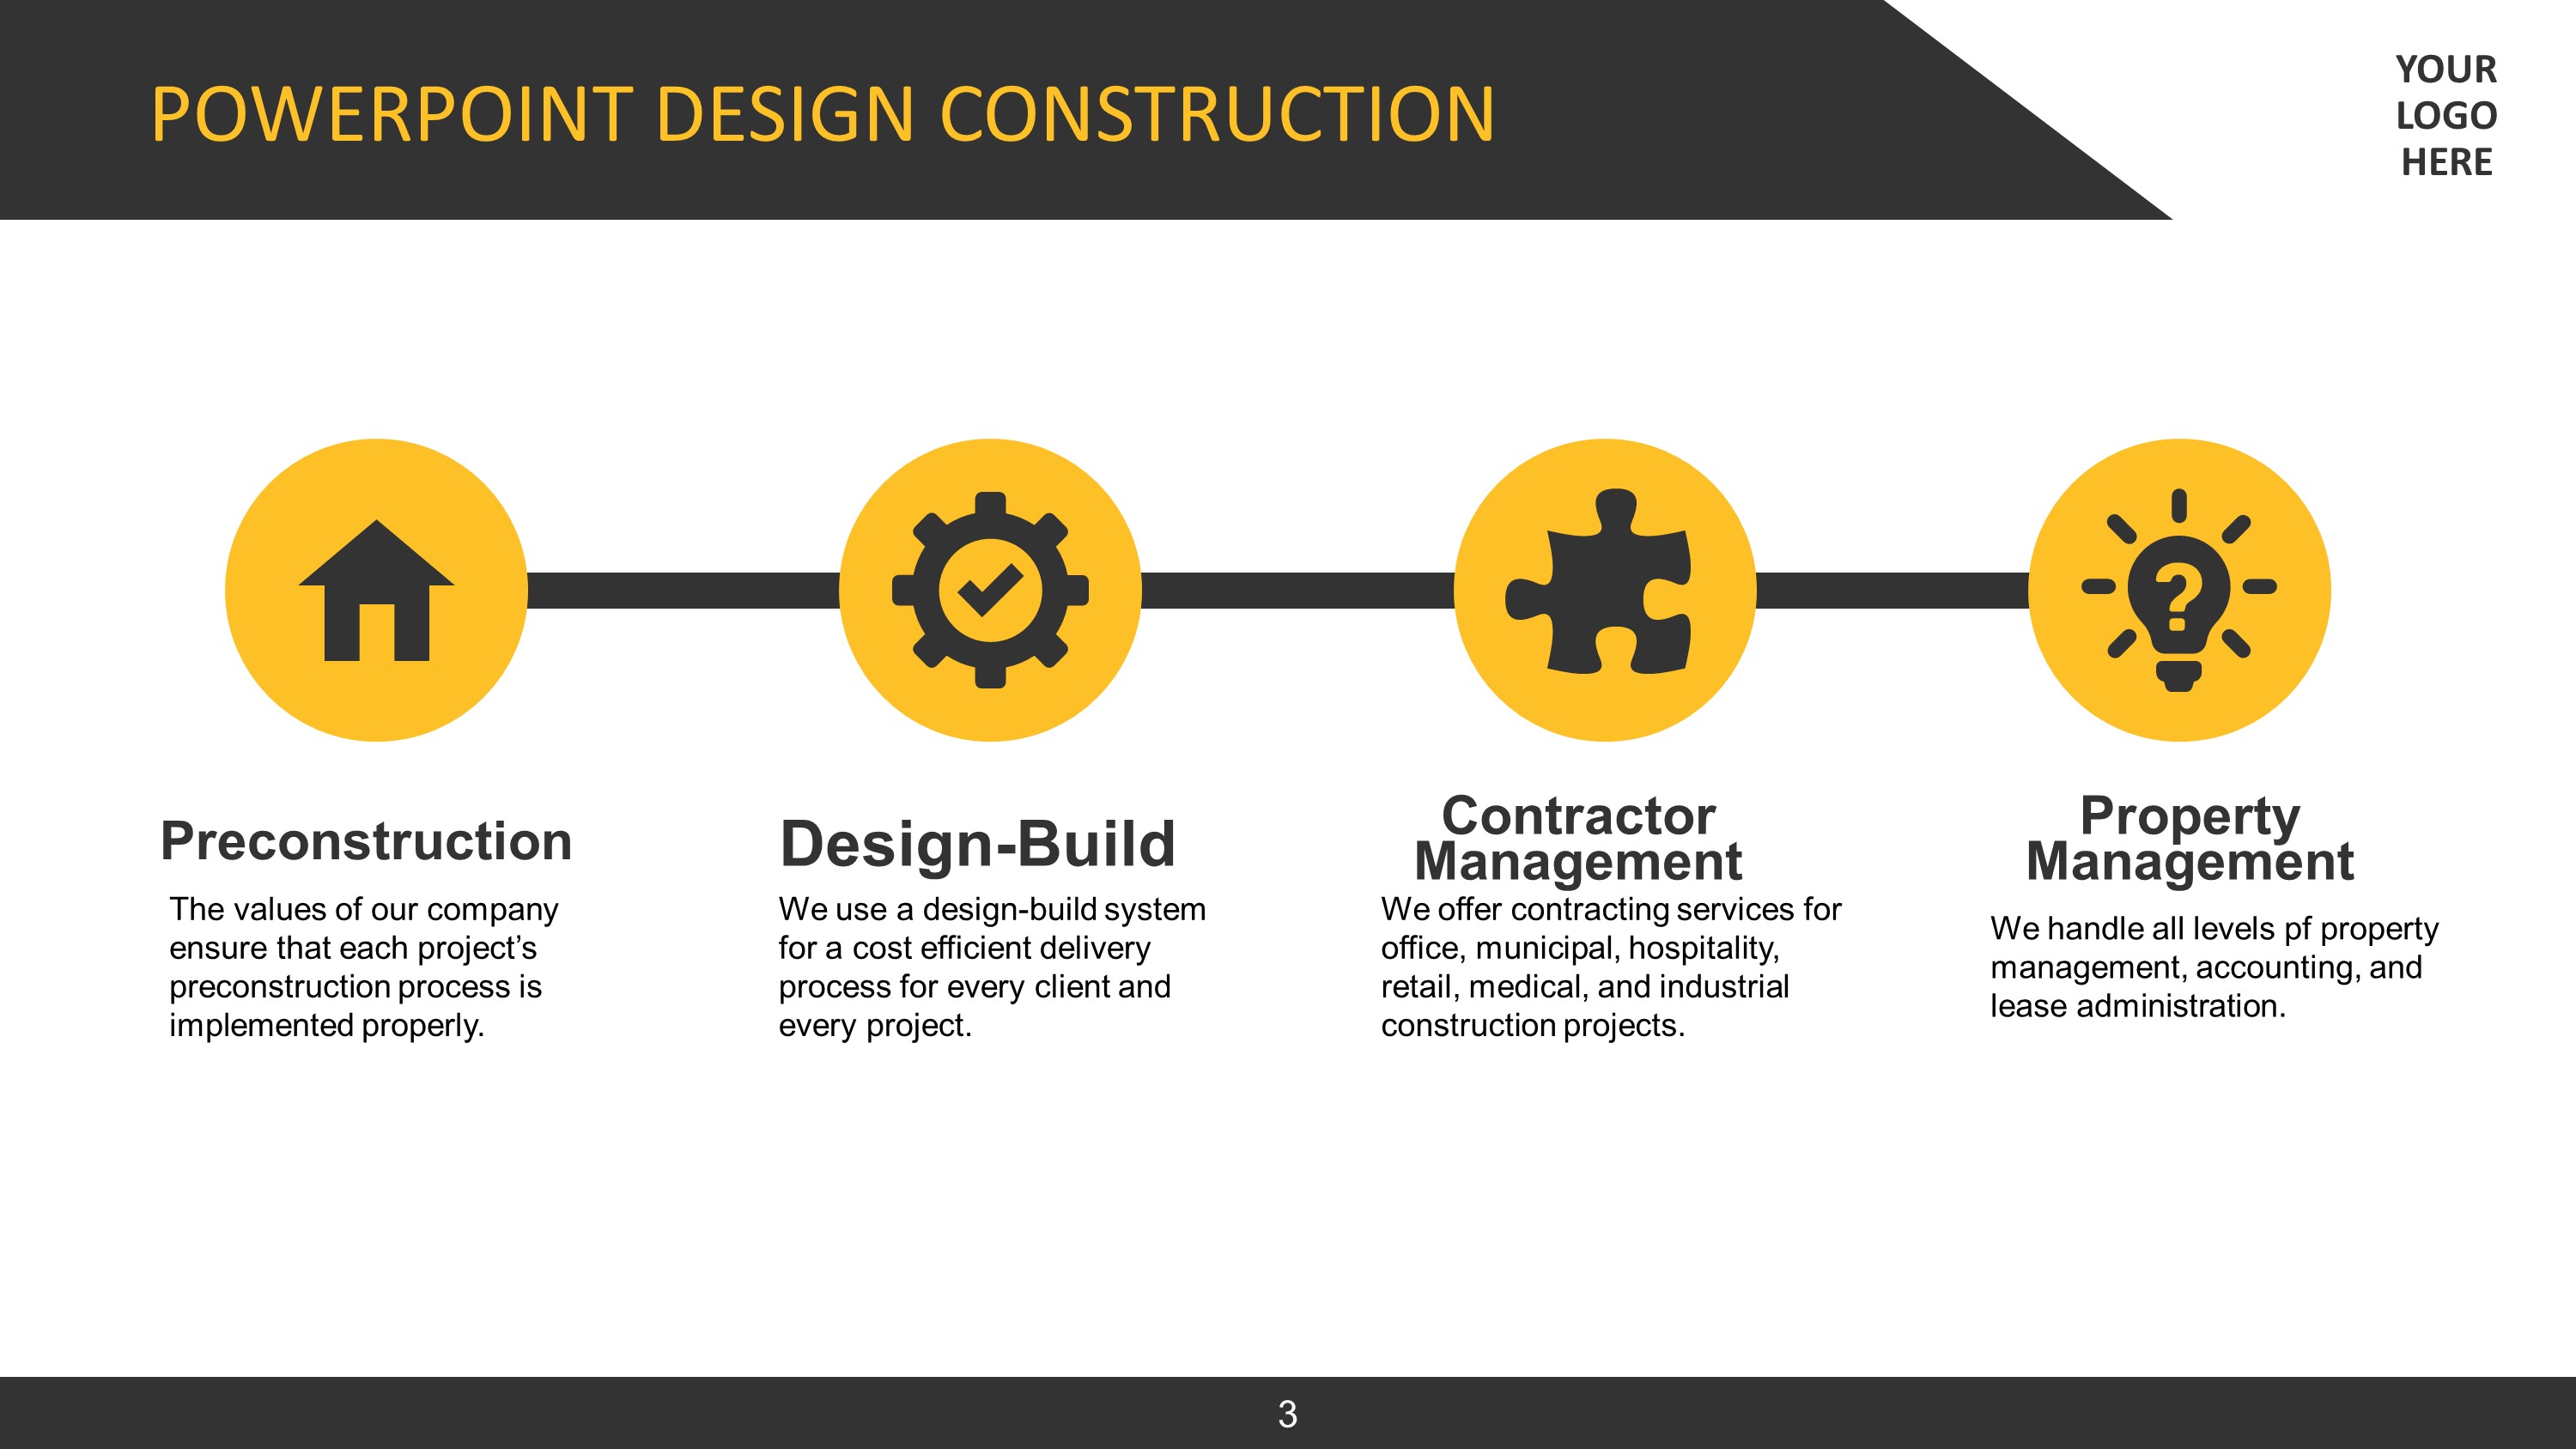 Construction Theme Slides PowerPoint